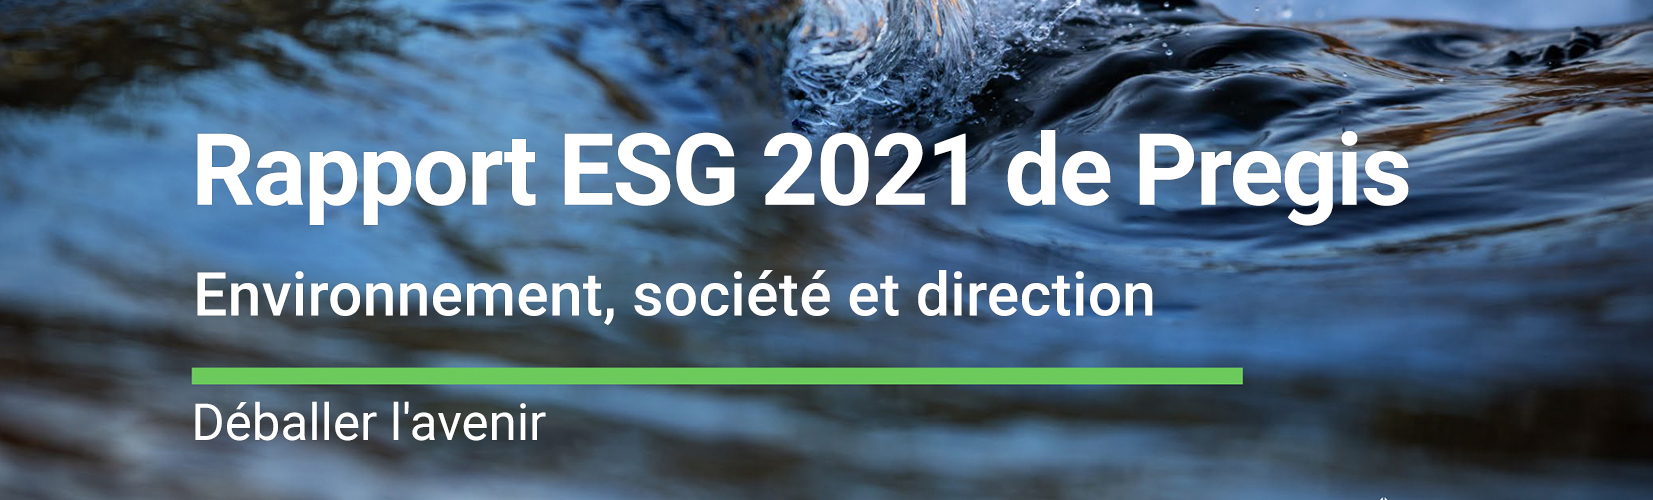 Rapport ESG Pregis 2021